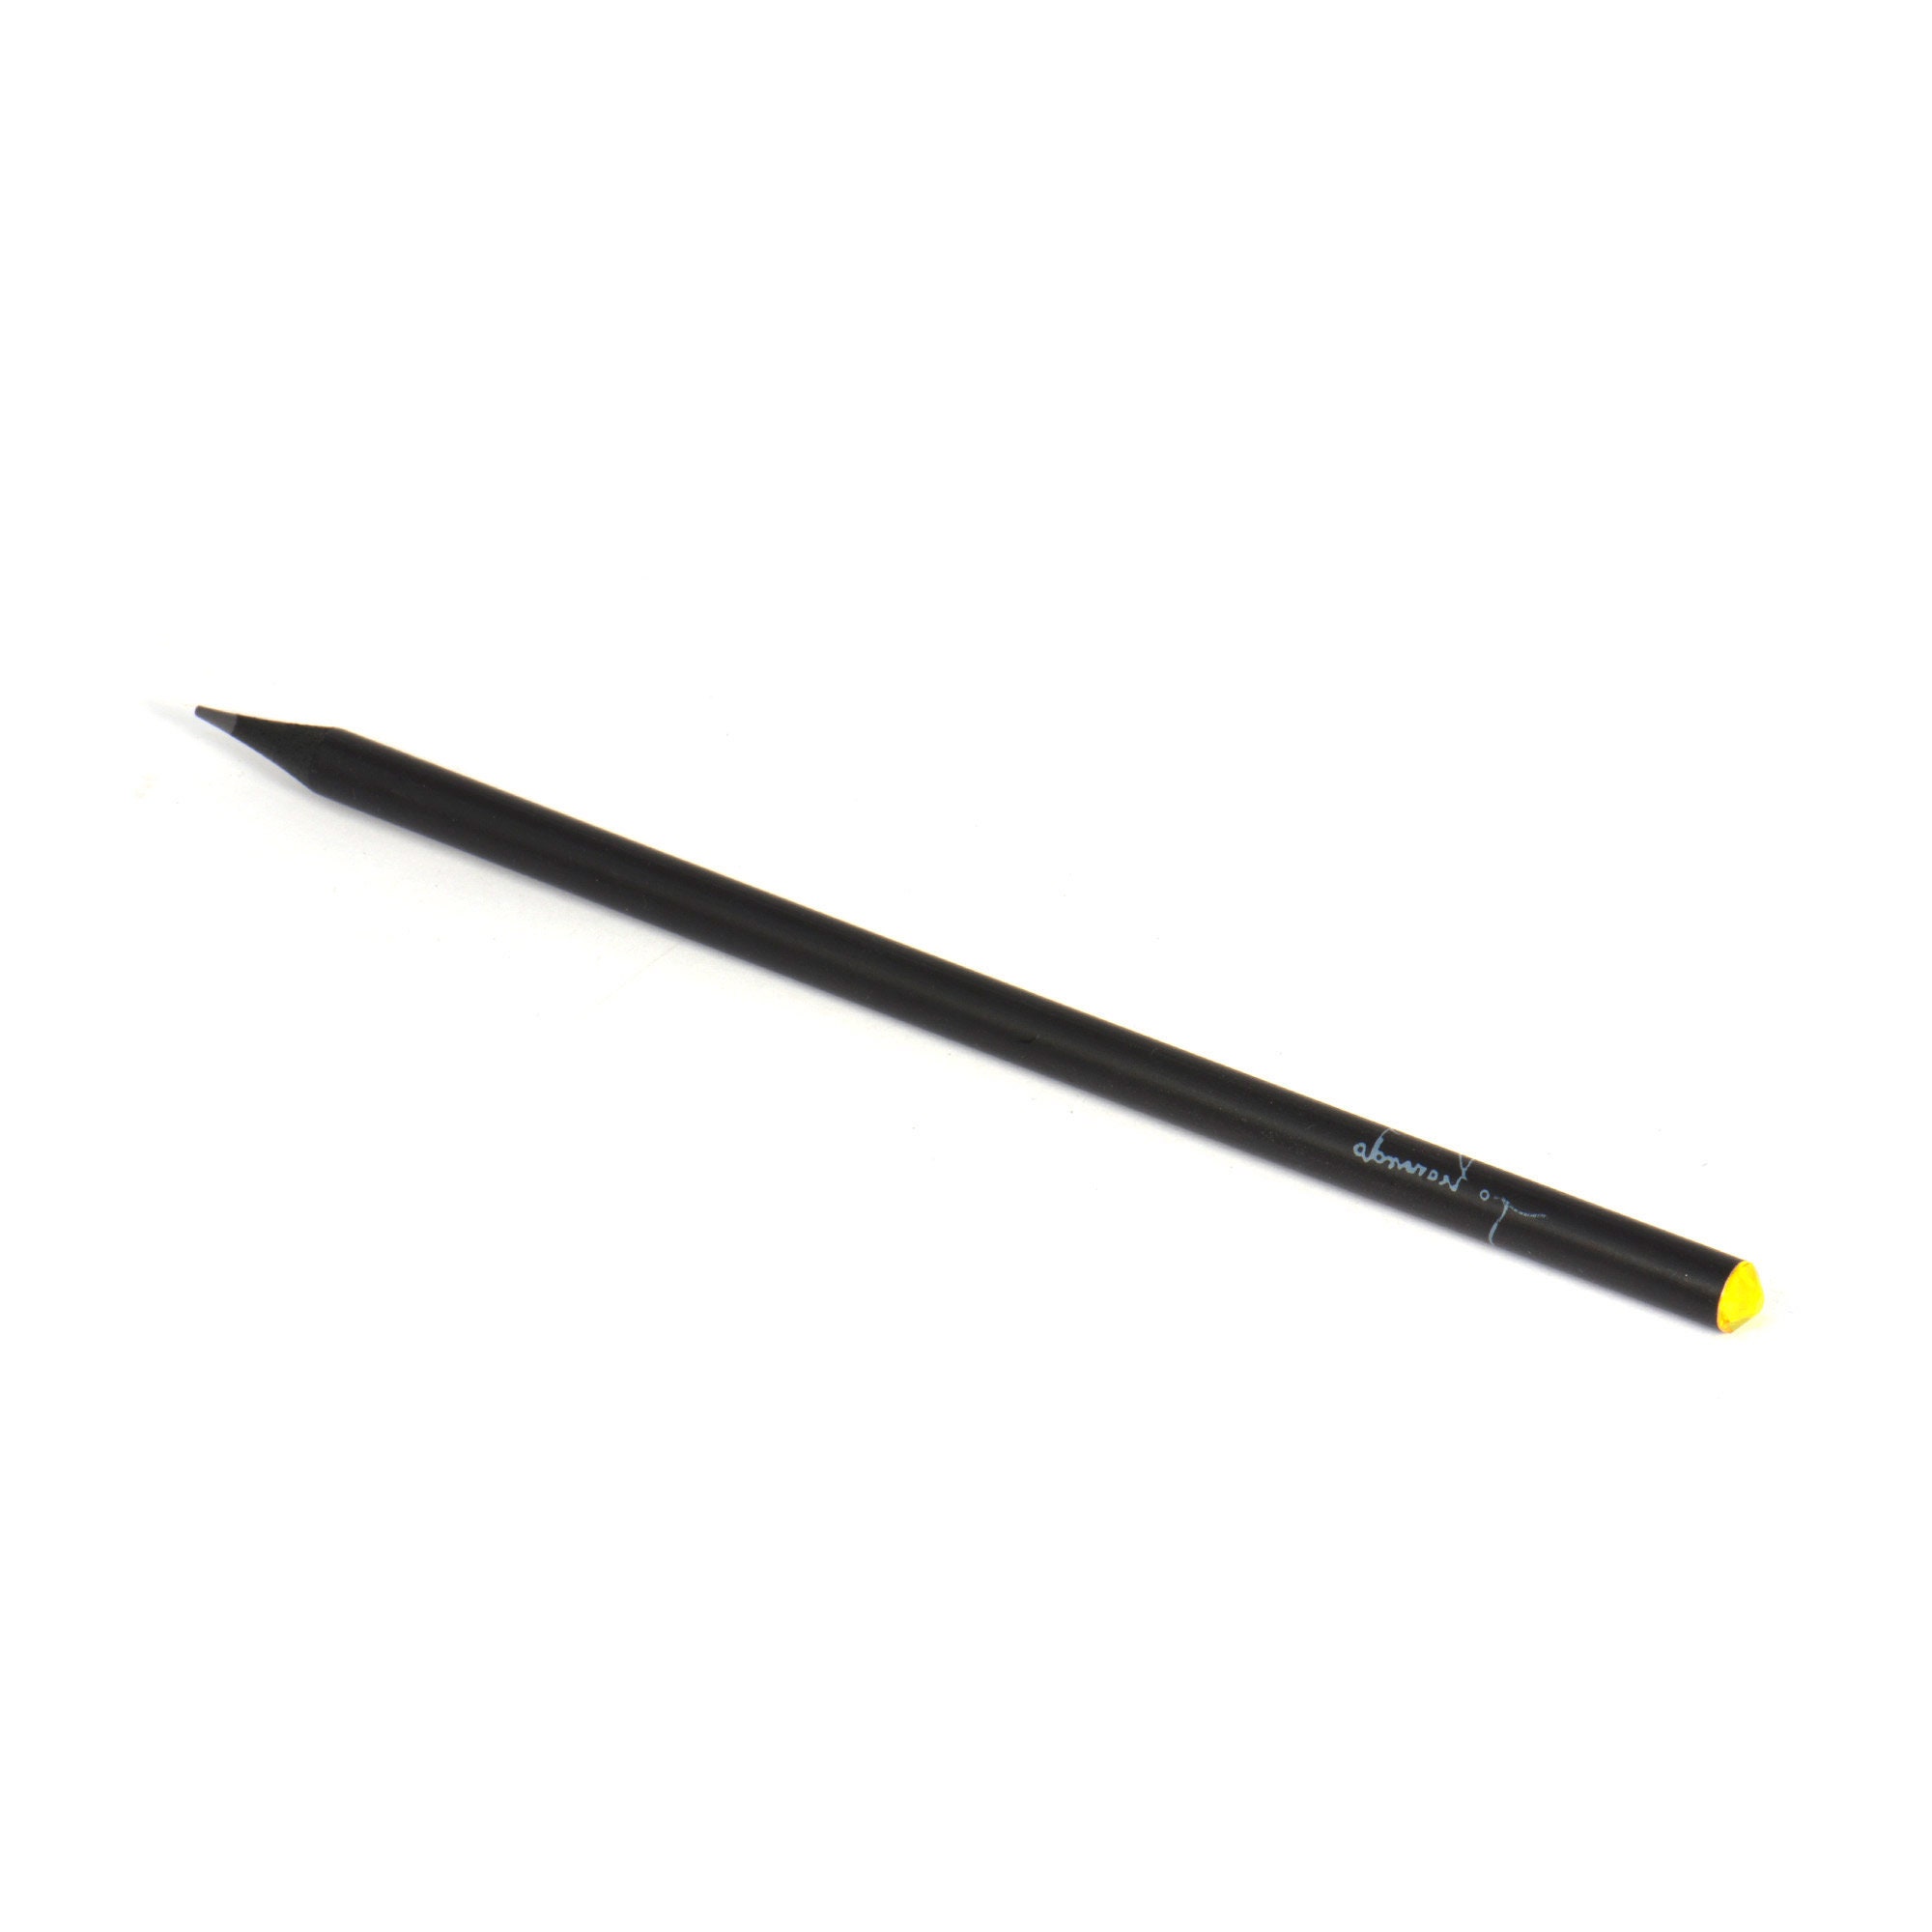 Black Pencil With Swarovski Made in Italy, Gift Idea 